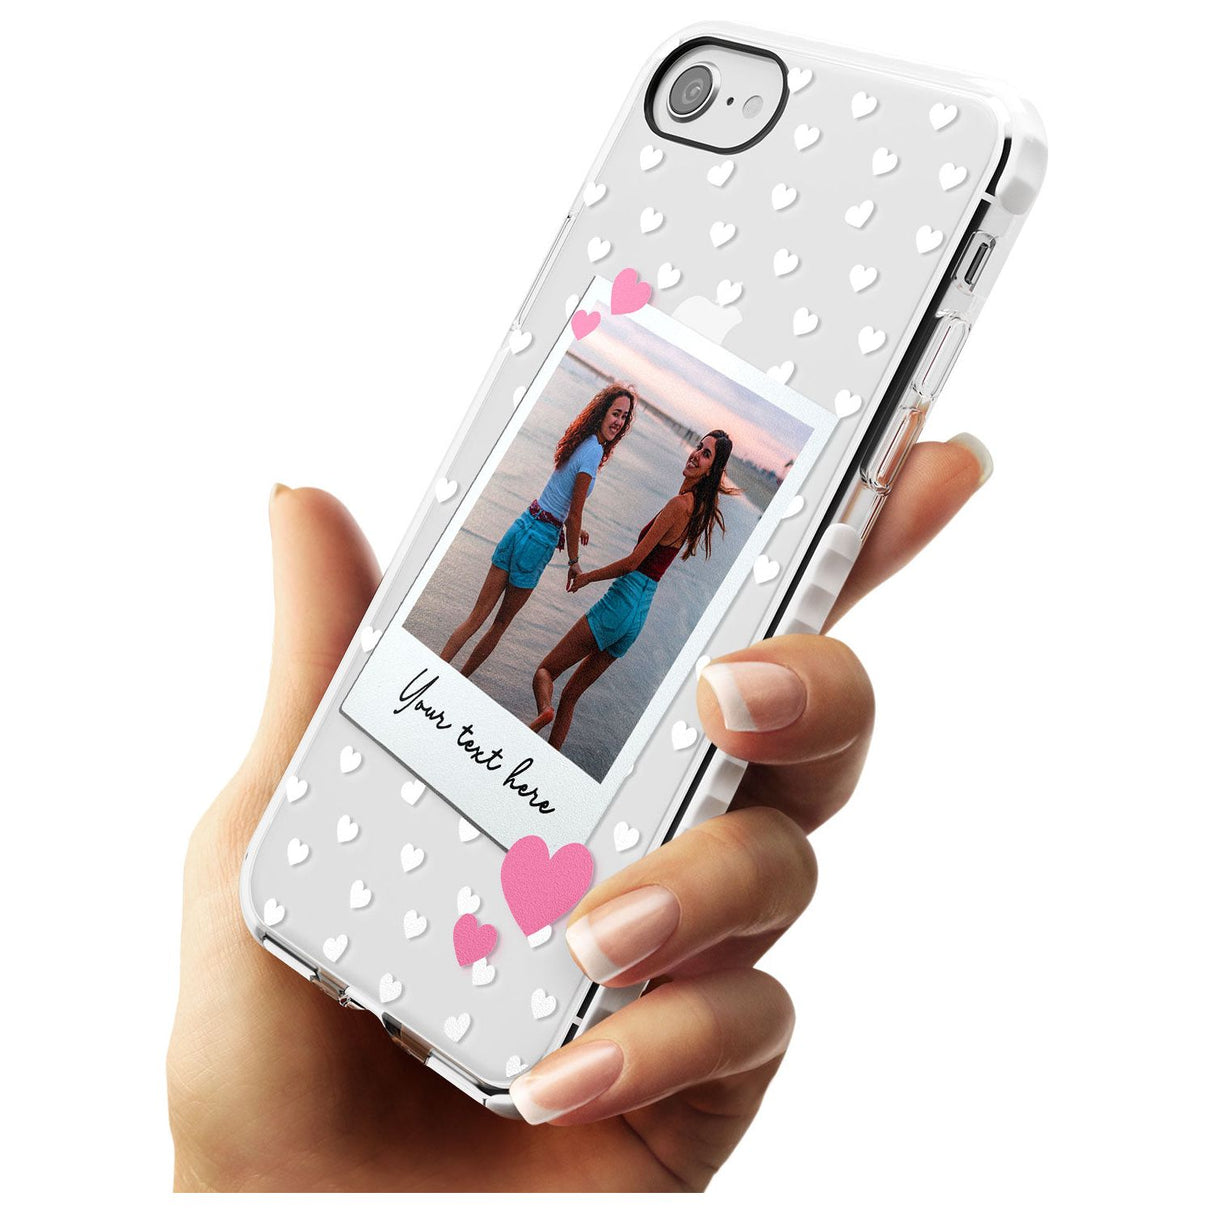 Instant Film & Hearts Slim TPU Phone Case for iPhone SE 8 7 Plus